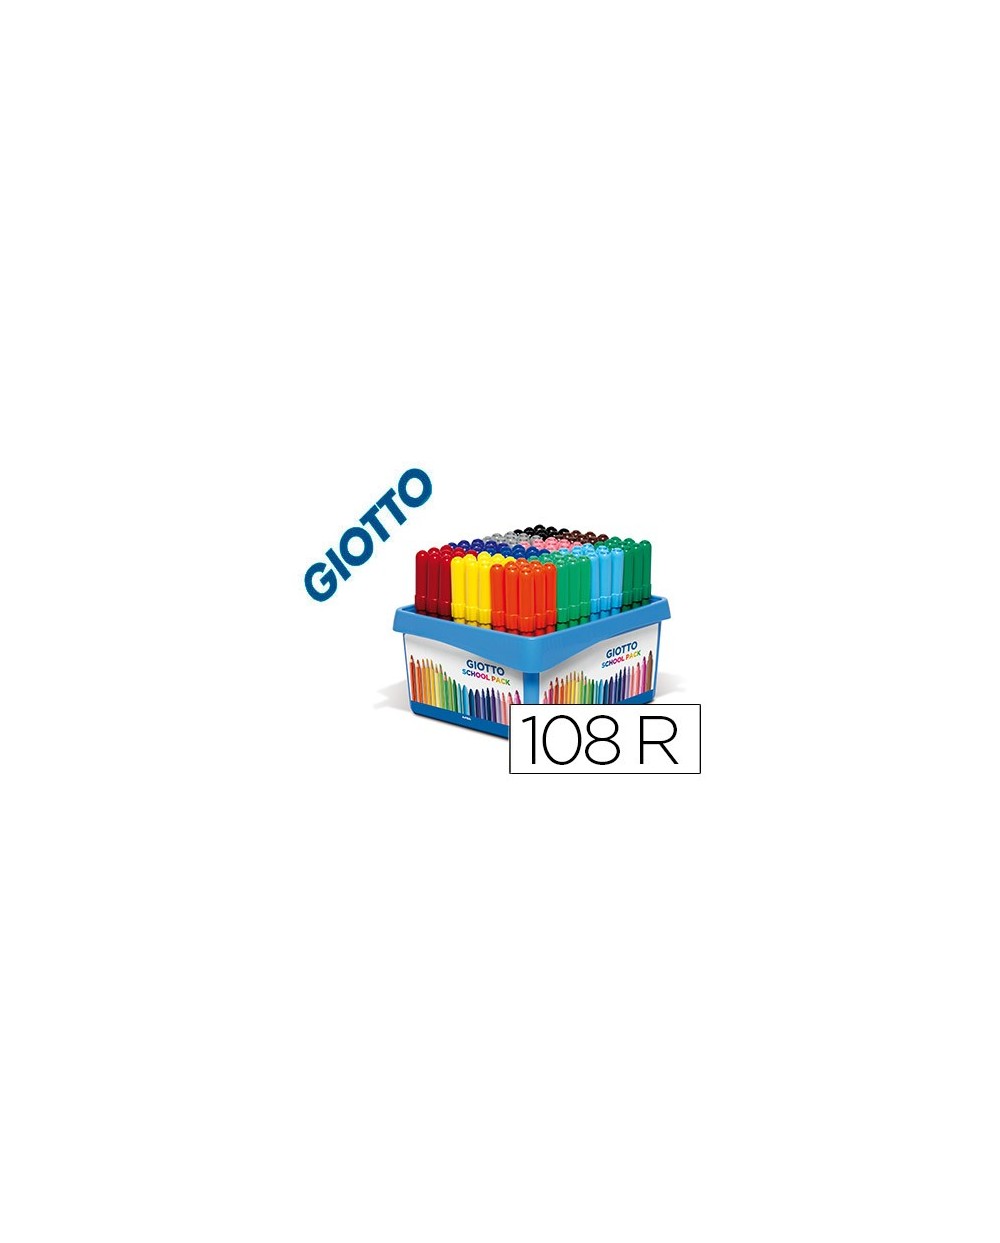 Rotulador giotto turbo maxi school pack de 108 unidades 12 colores x 9 unidades